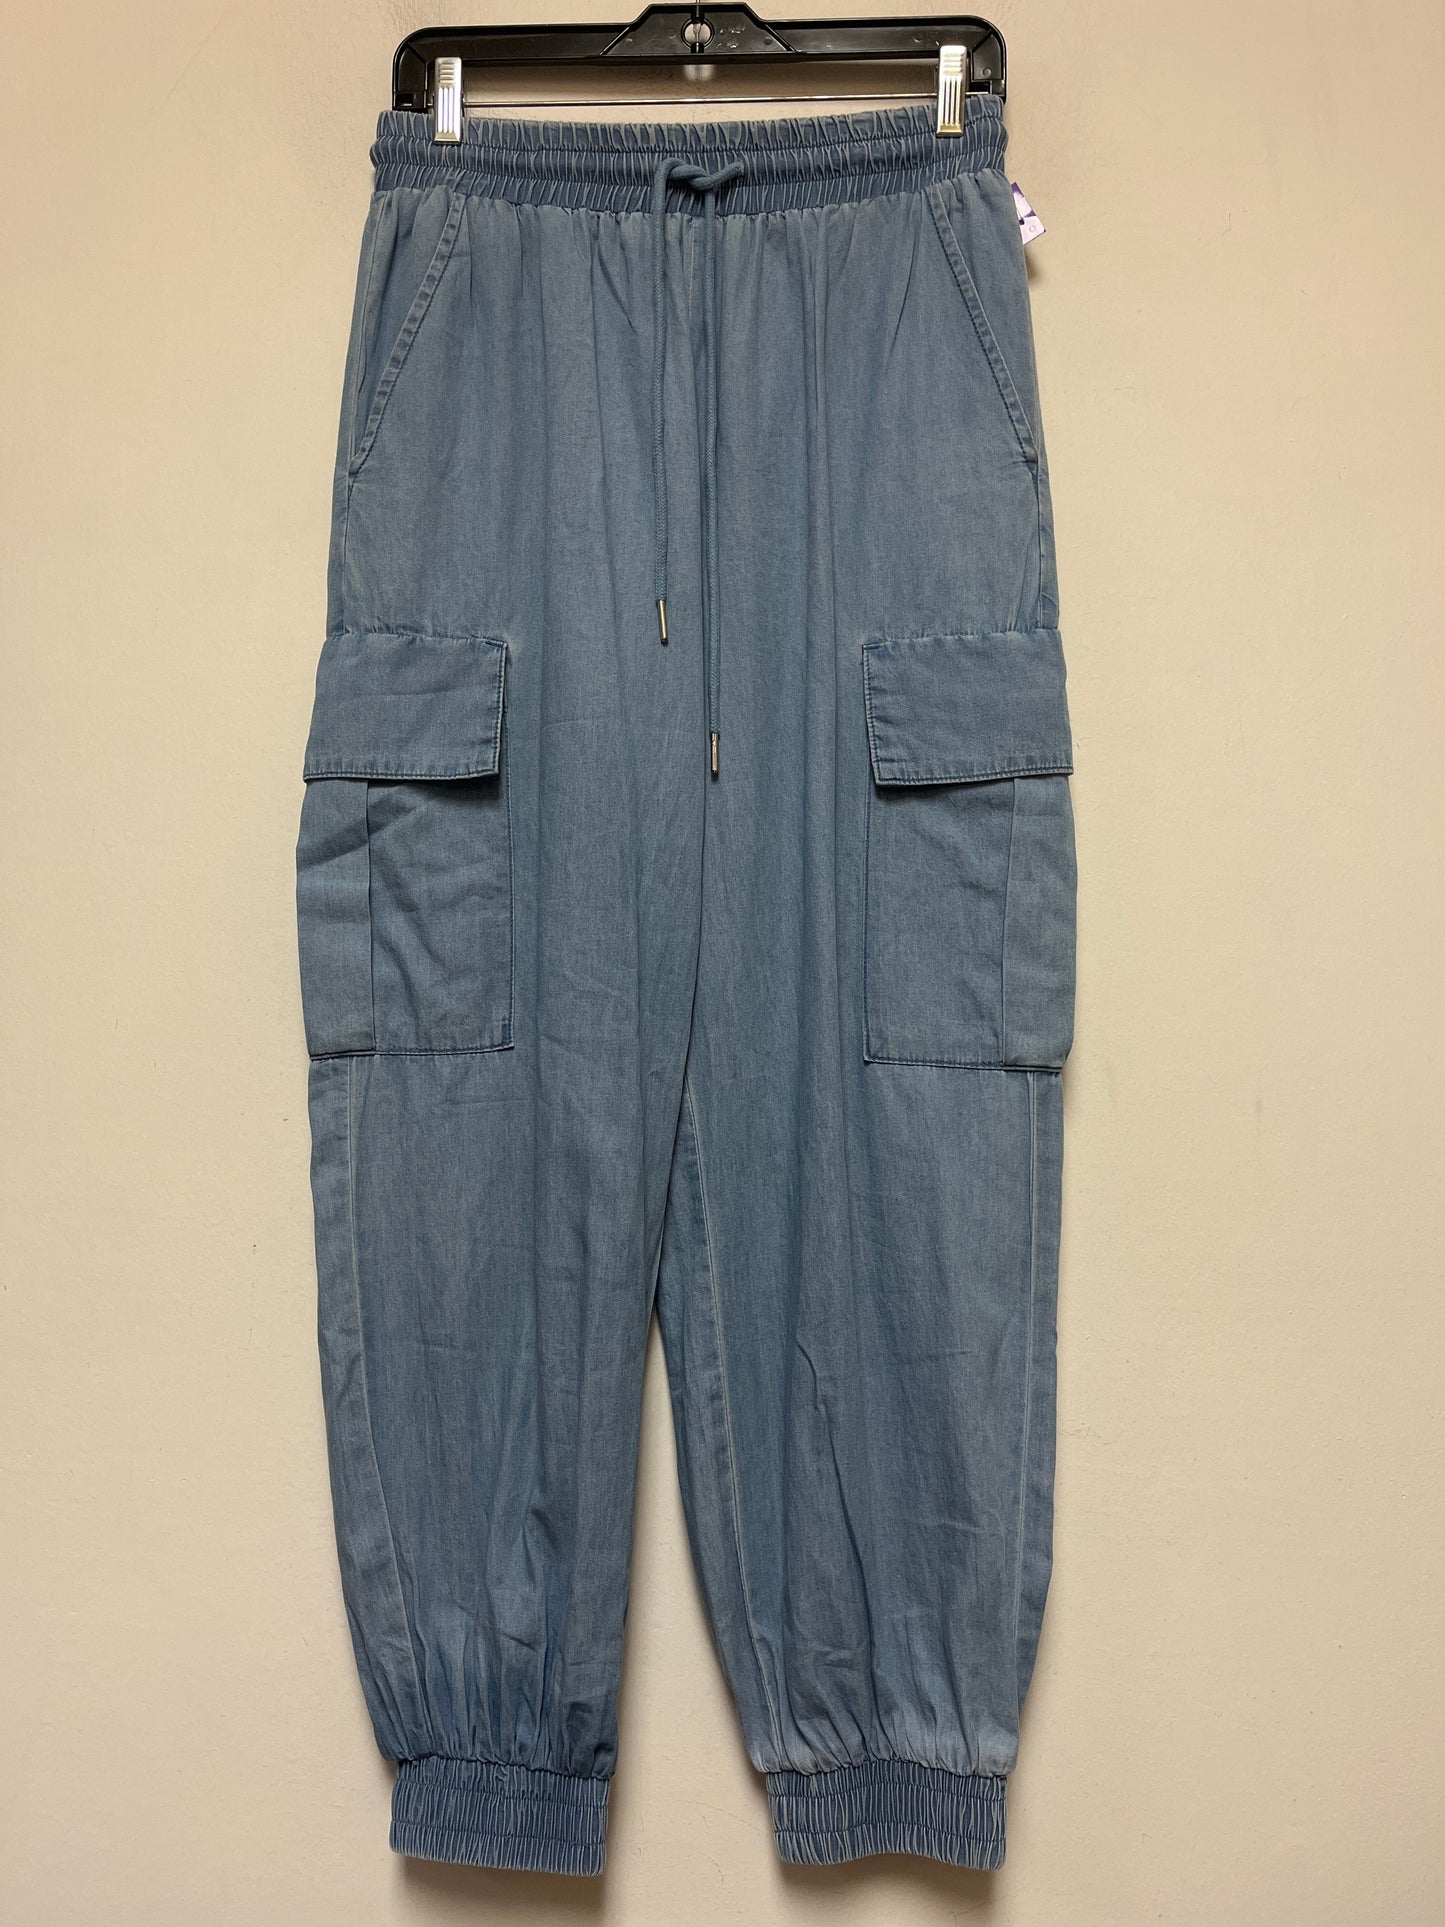 Blue Denim Pants Joggers Forever 21, Size 8